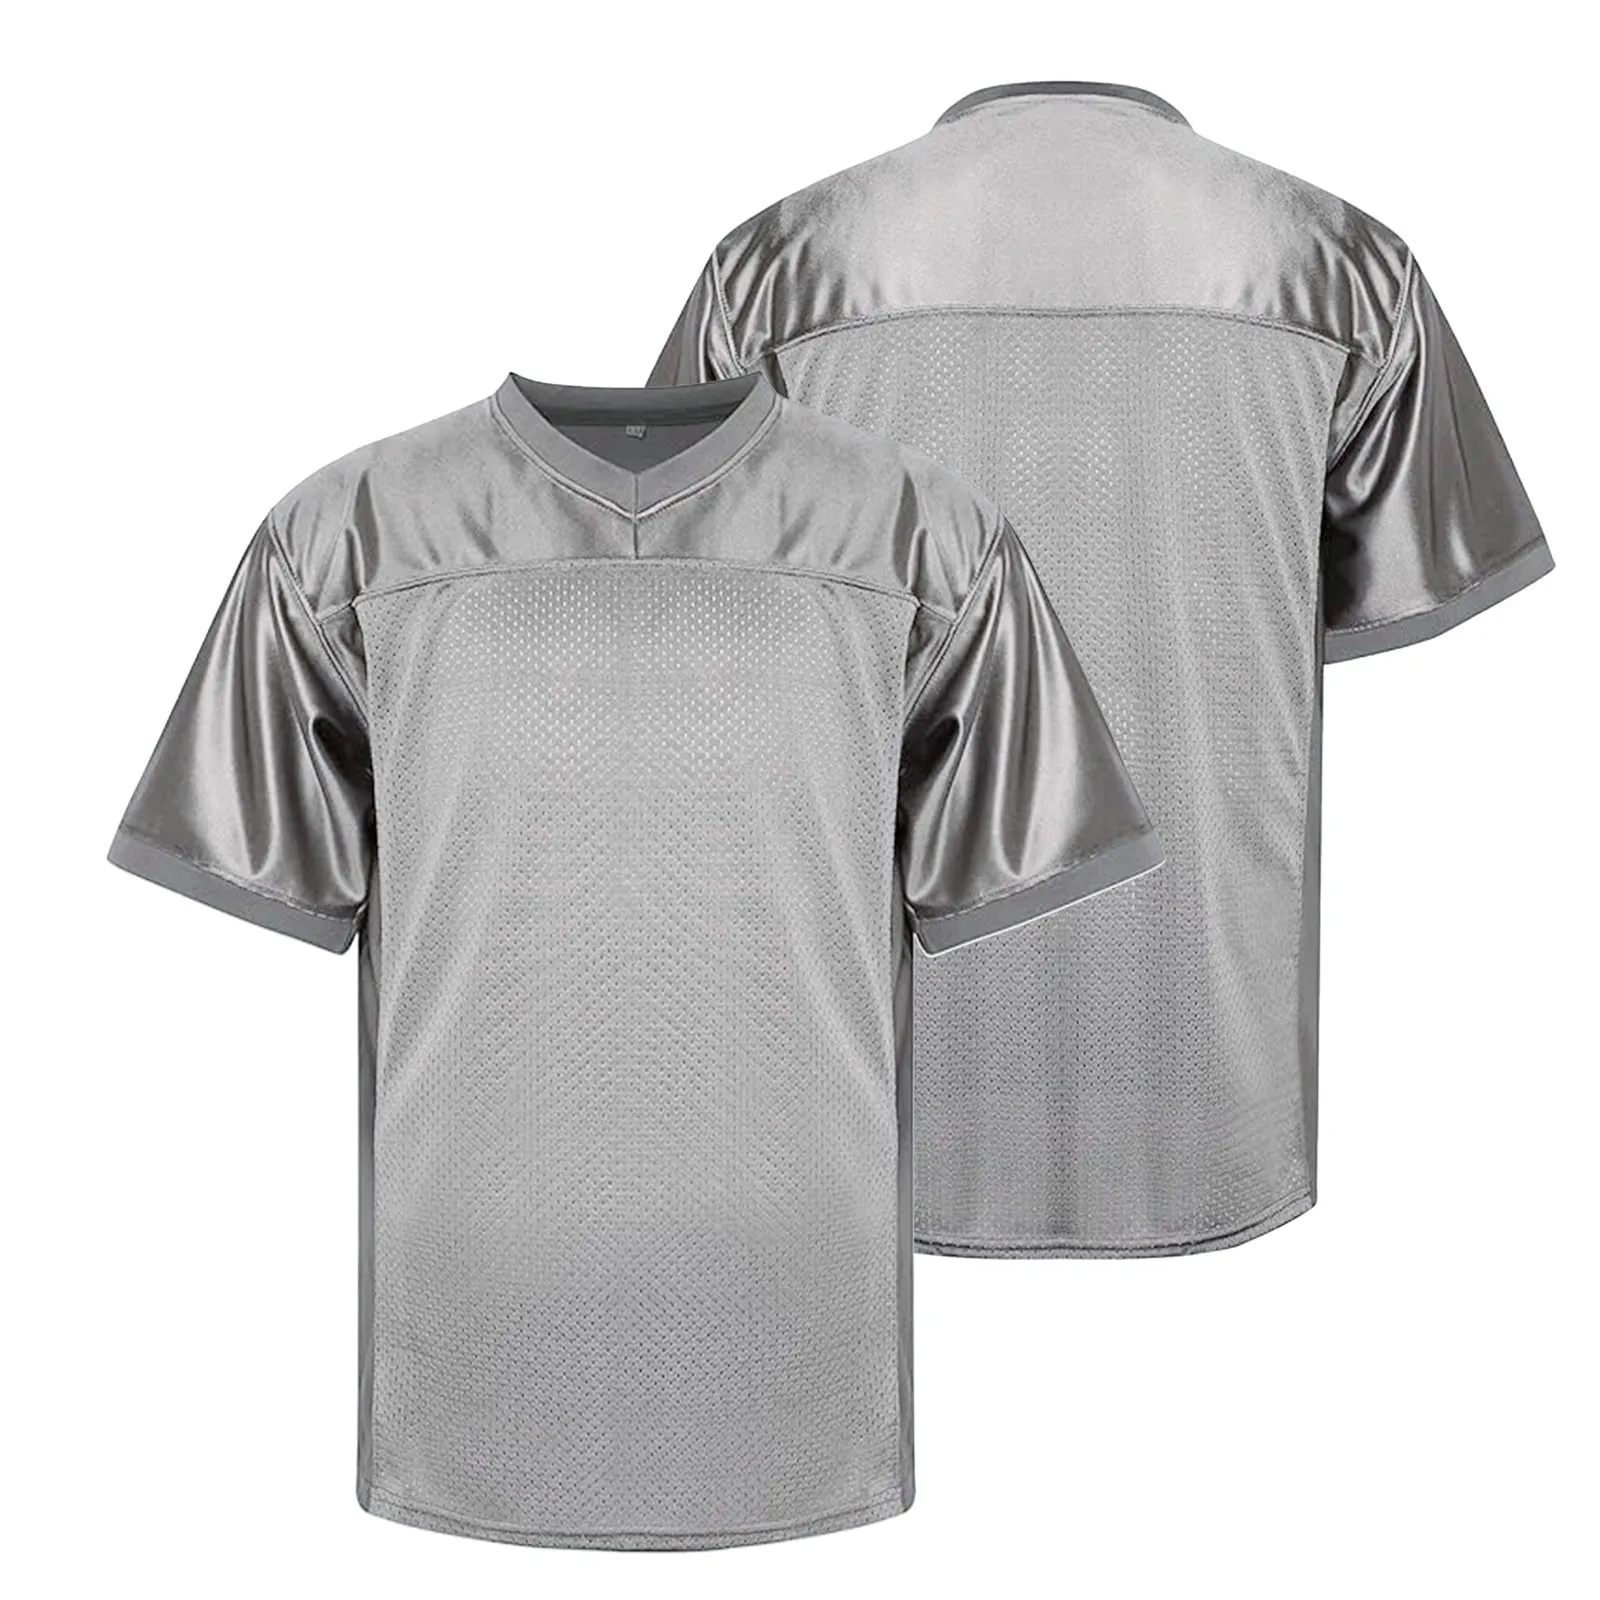 Mens Fashion Simple Sports T Shirt Hip Hop Party Blank Football Top Cotton Sleeve Shirts Men